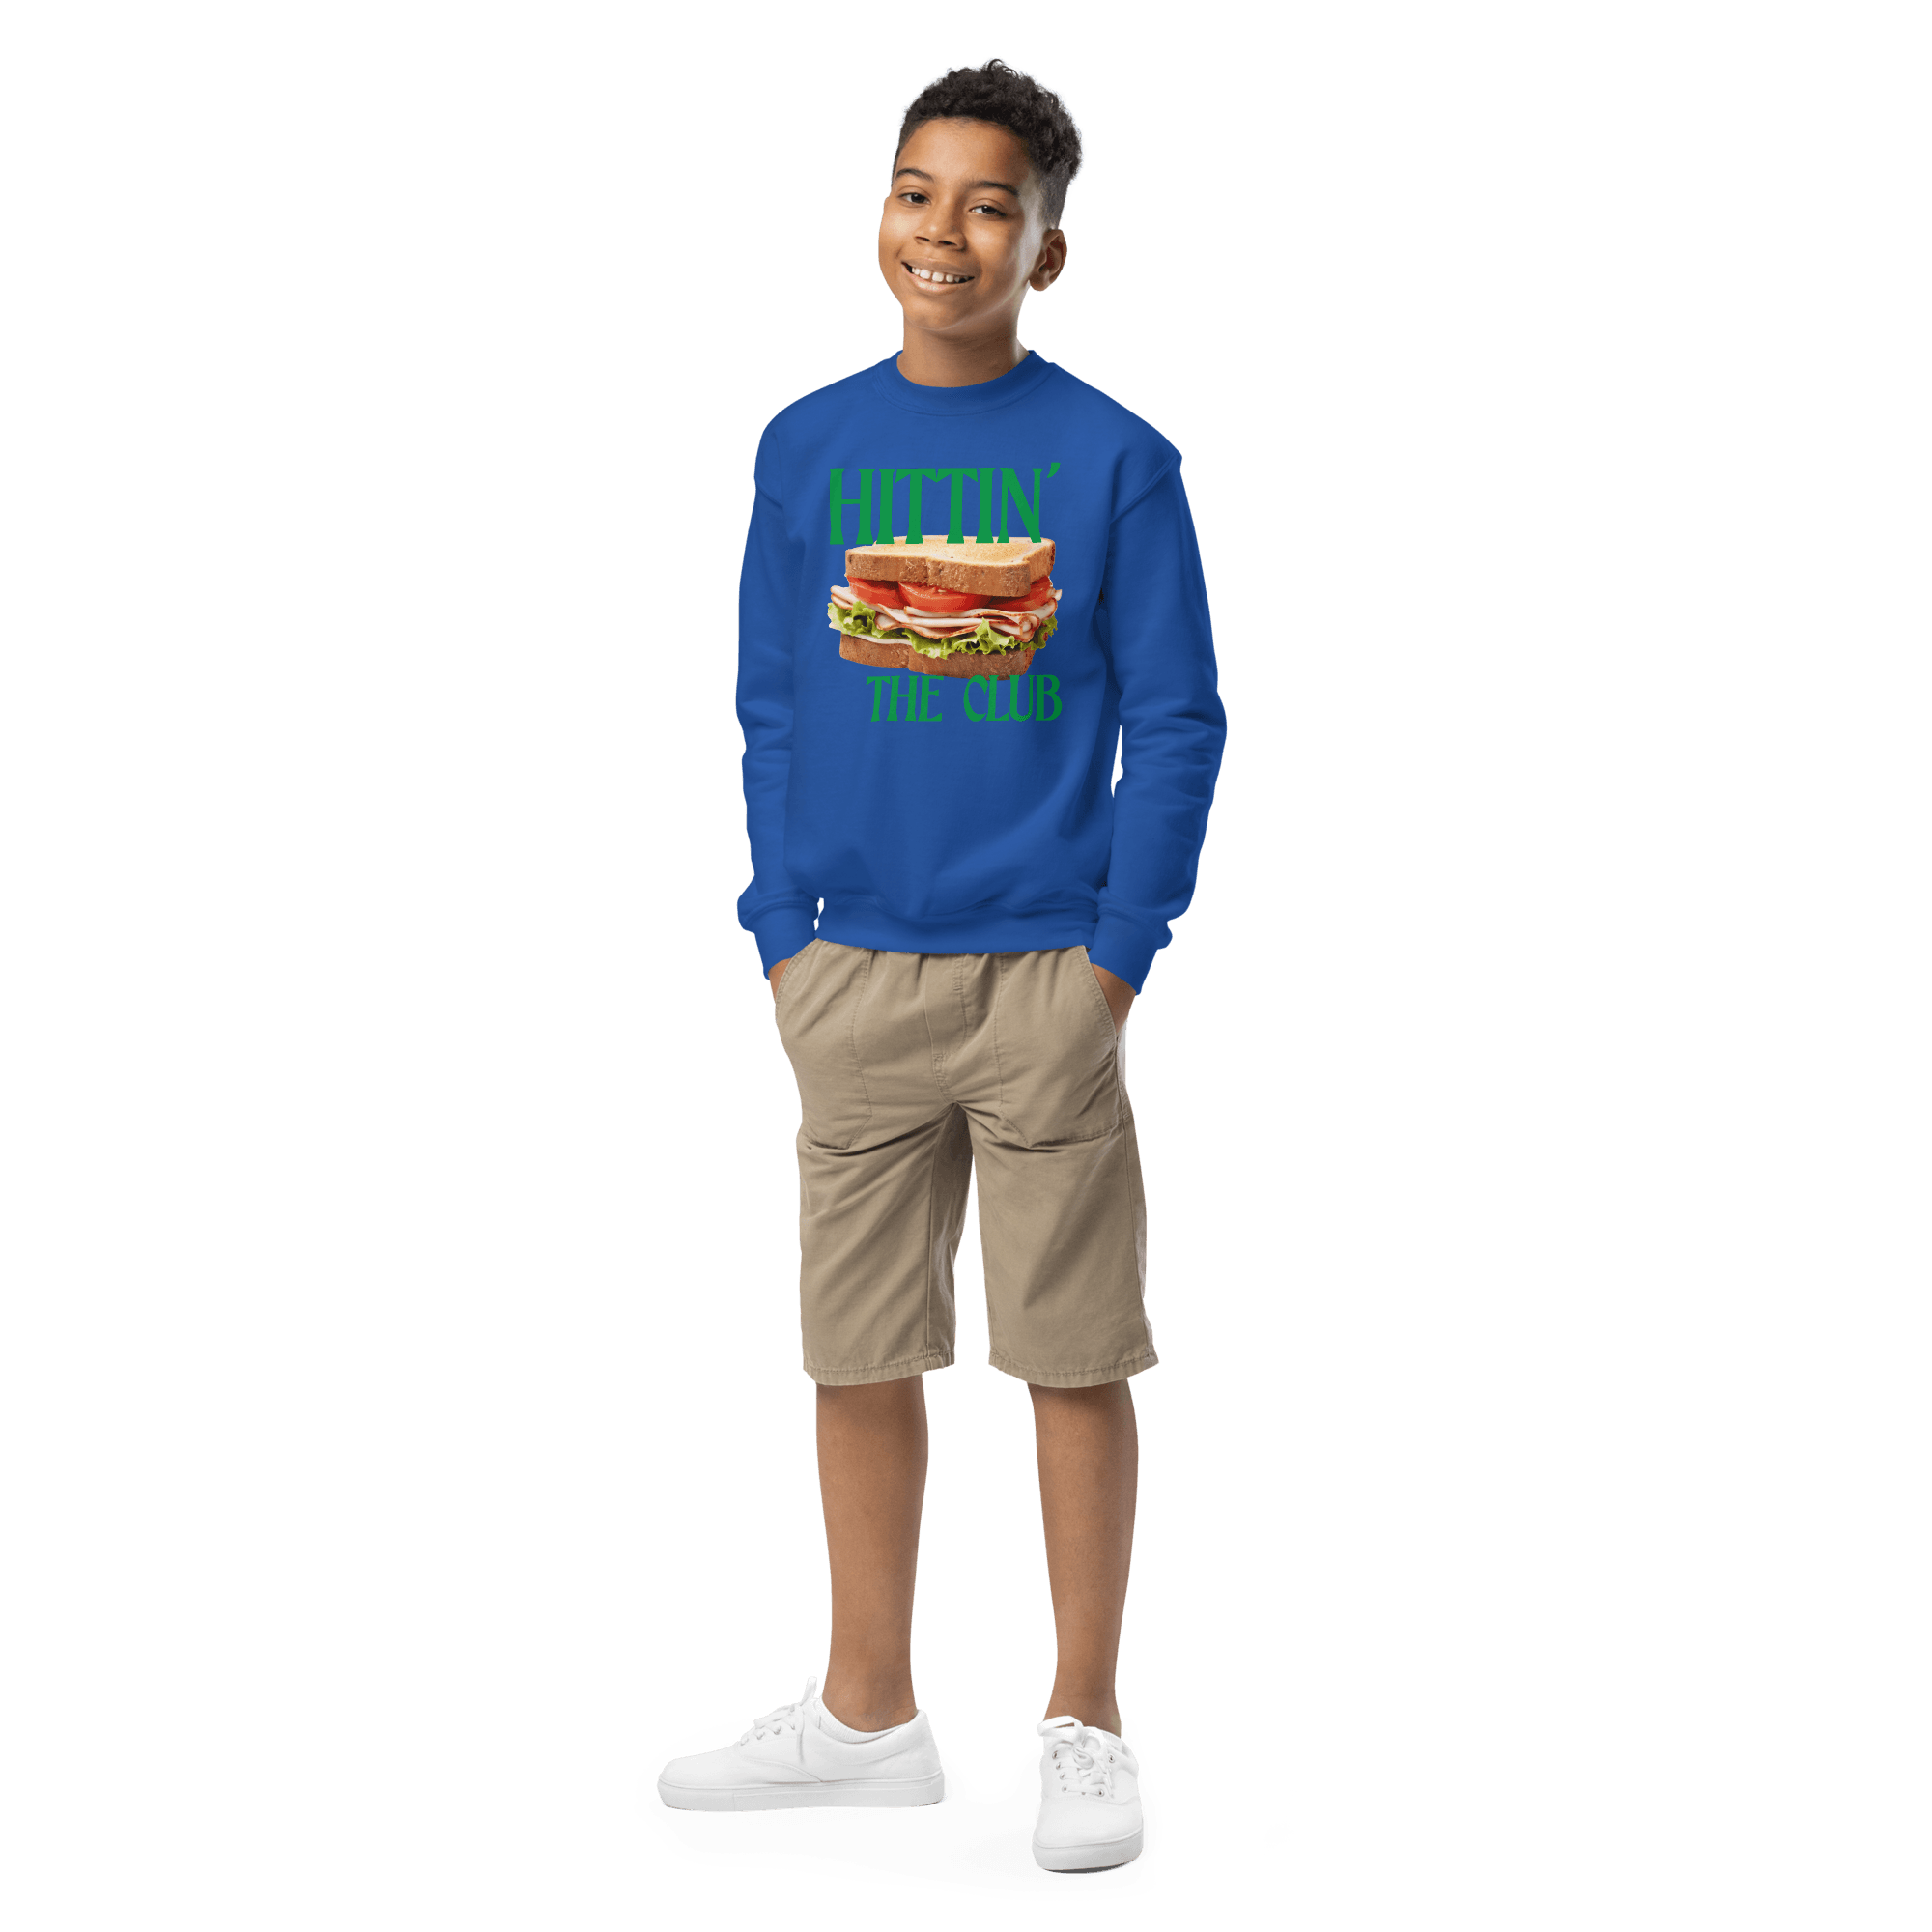 Hittin' The Club Youth Kids Sweatshirt Polychrome Goods 🍊